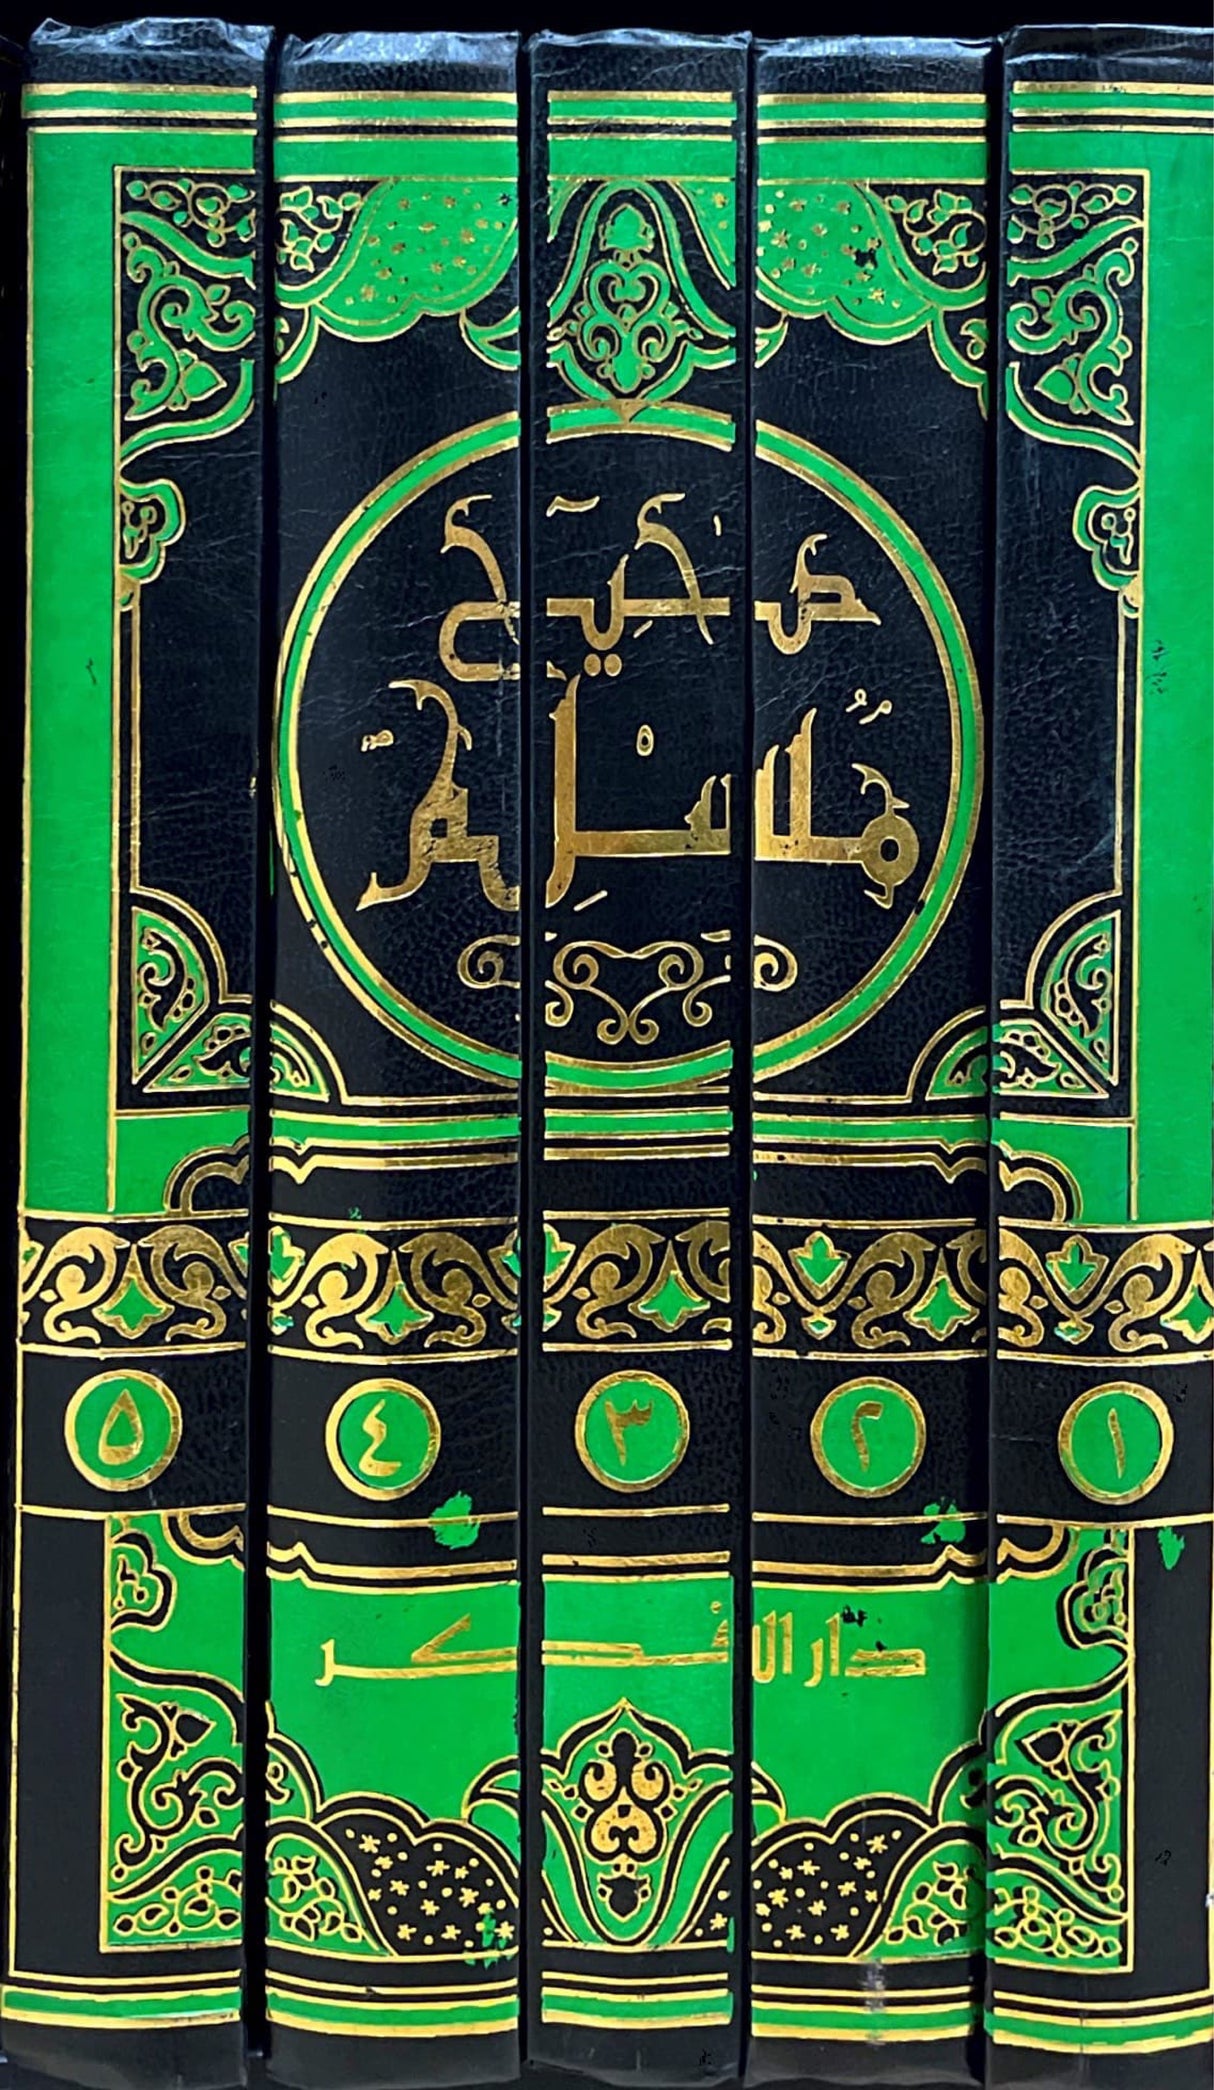 صحيح مسلم Sahih Muslim (Fikr)(5 Volume Set)